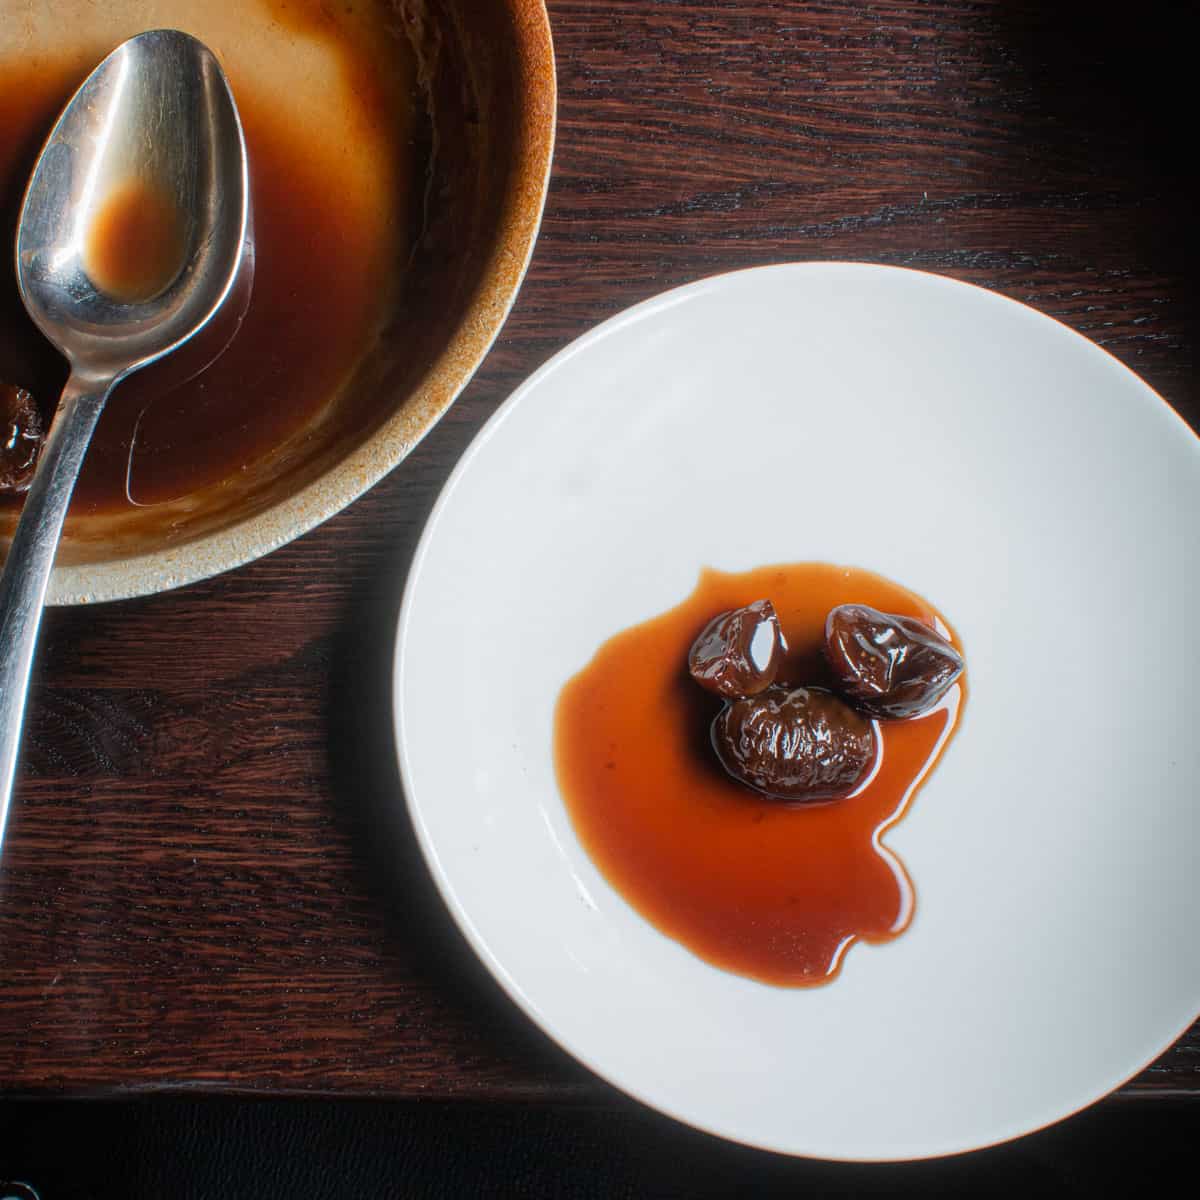 Savory chestnut sauce